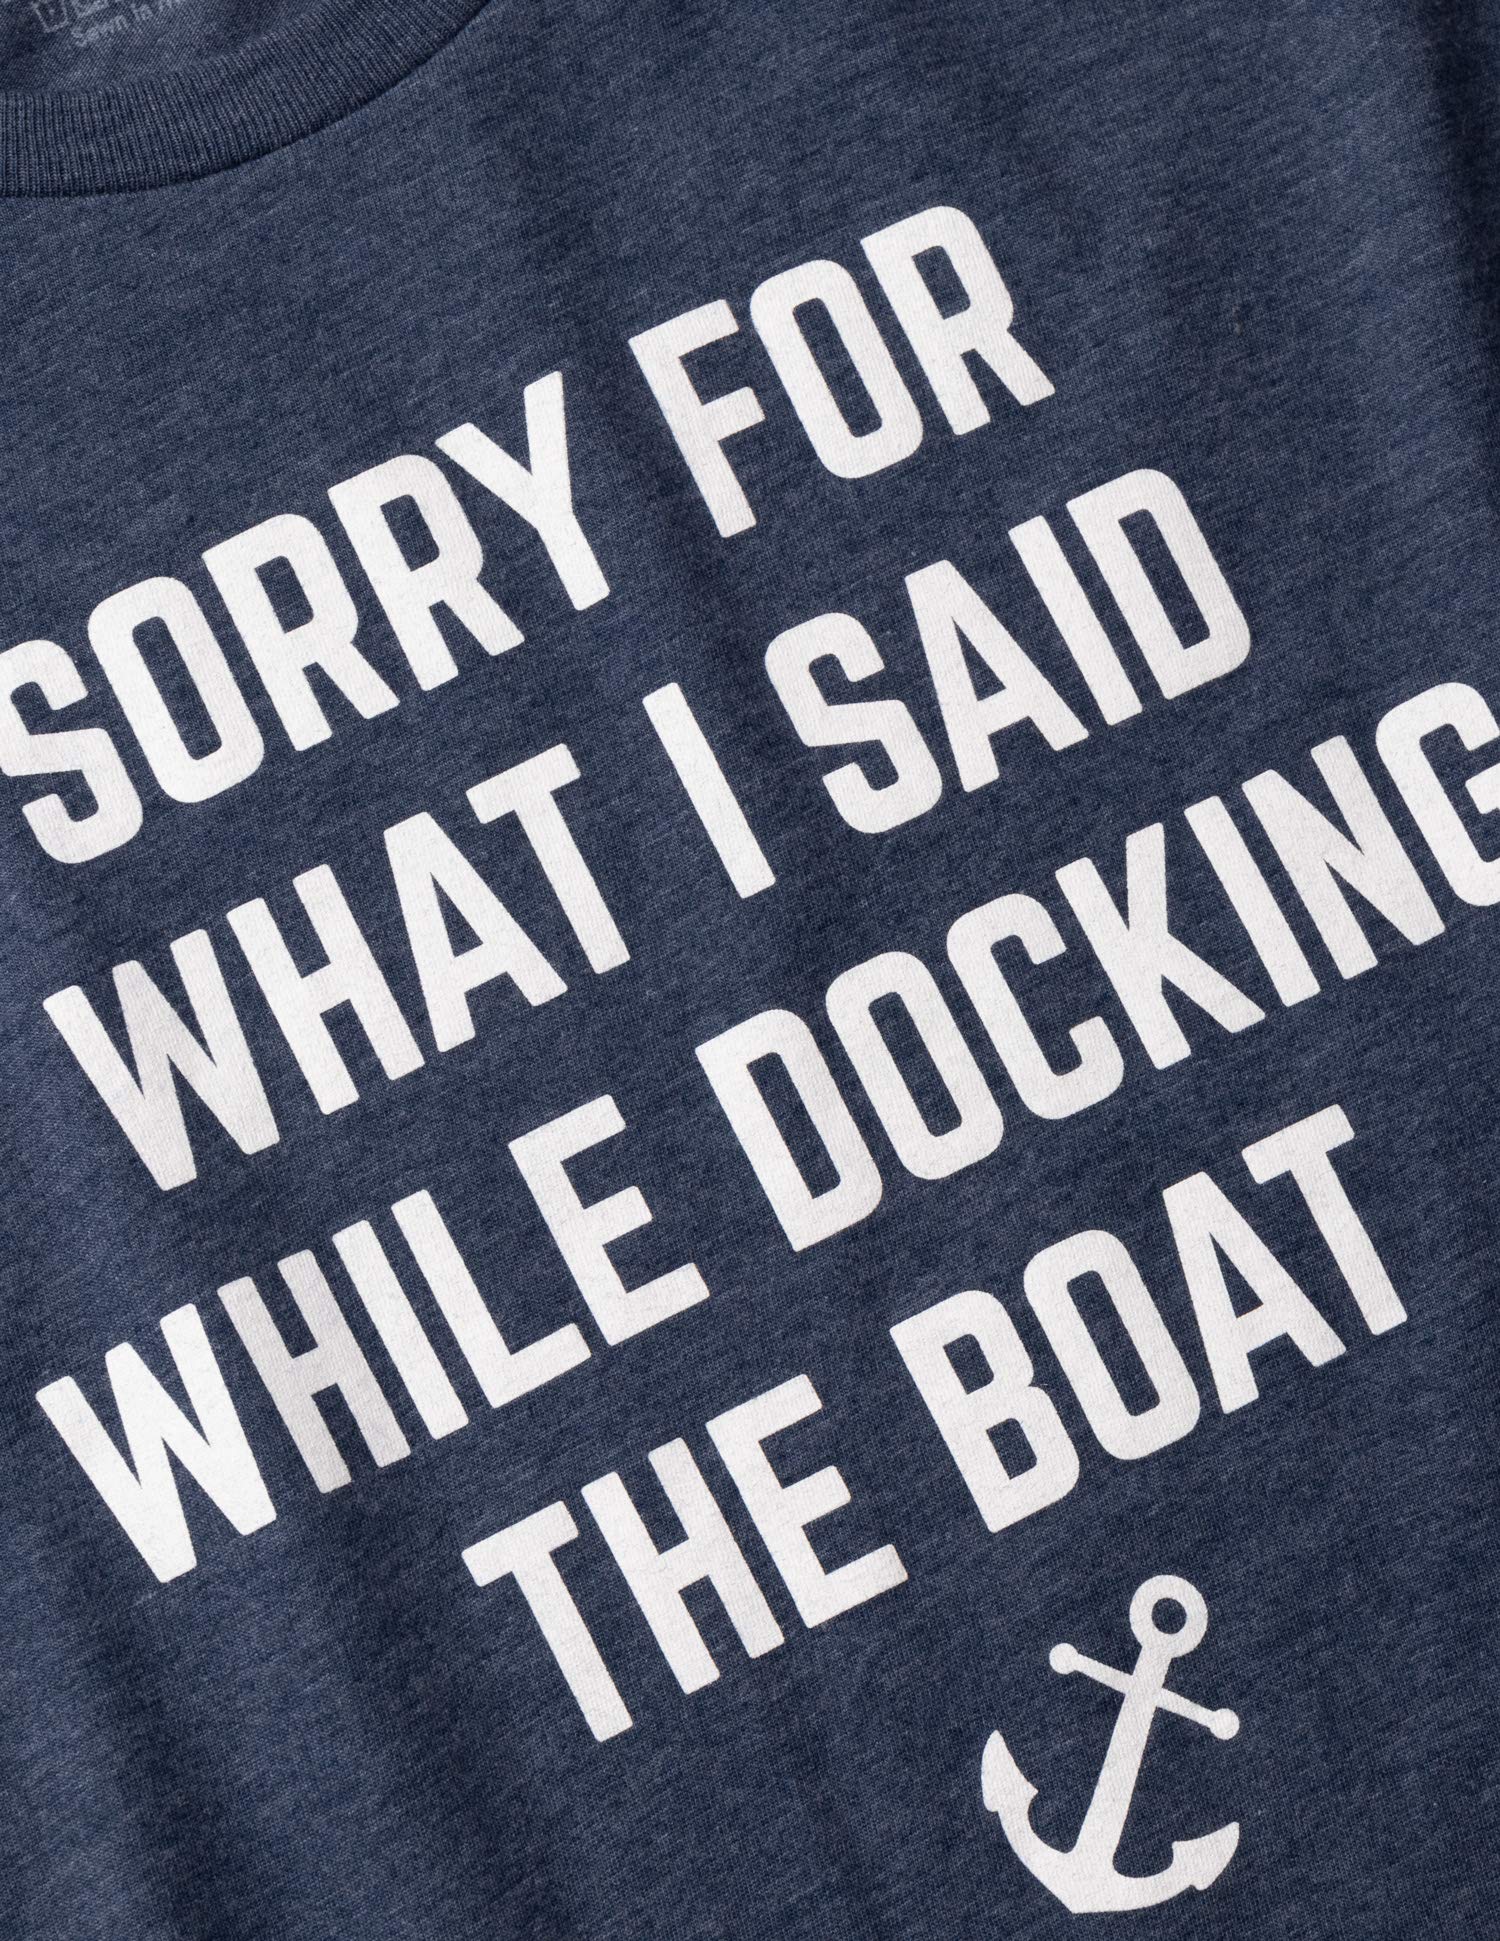 Boating Humor Tee Shirts - Funny Boat Captain, Nautical Fishing Joke T-Shirts for Men or Women